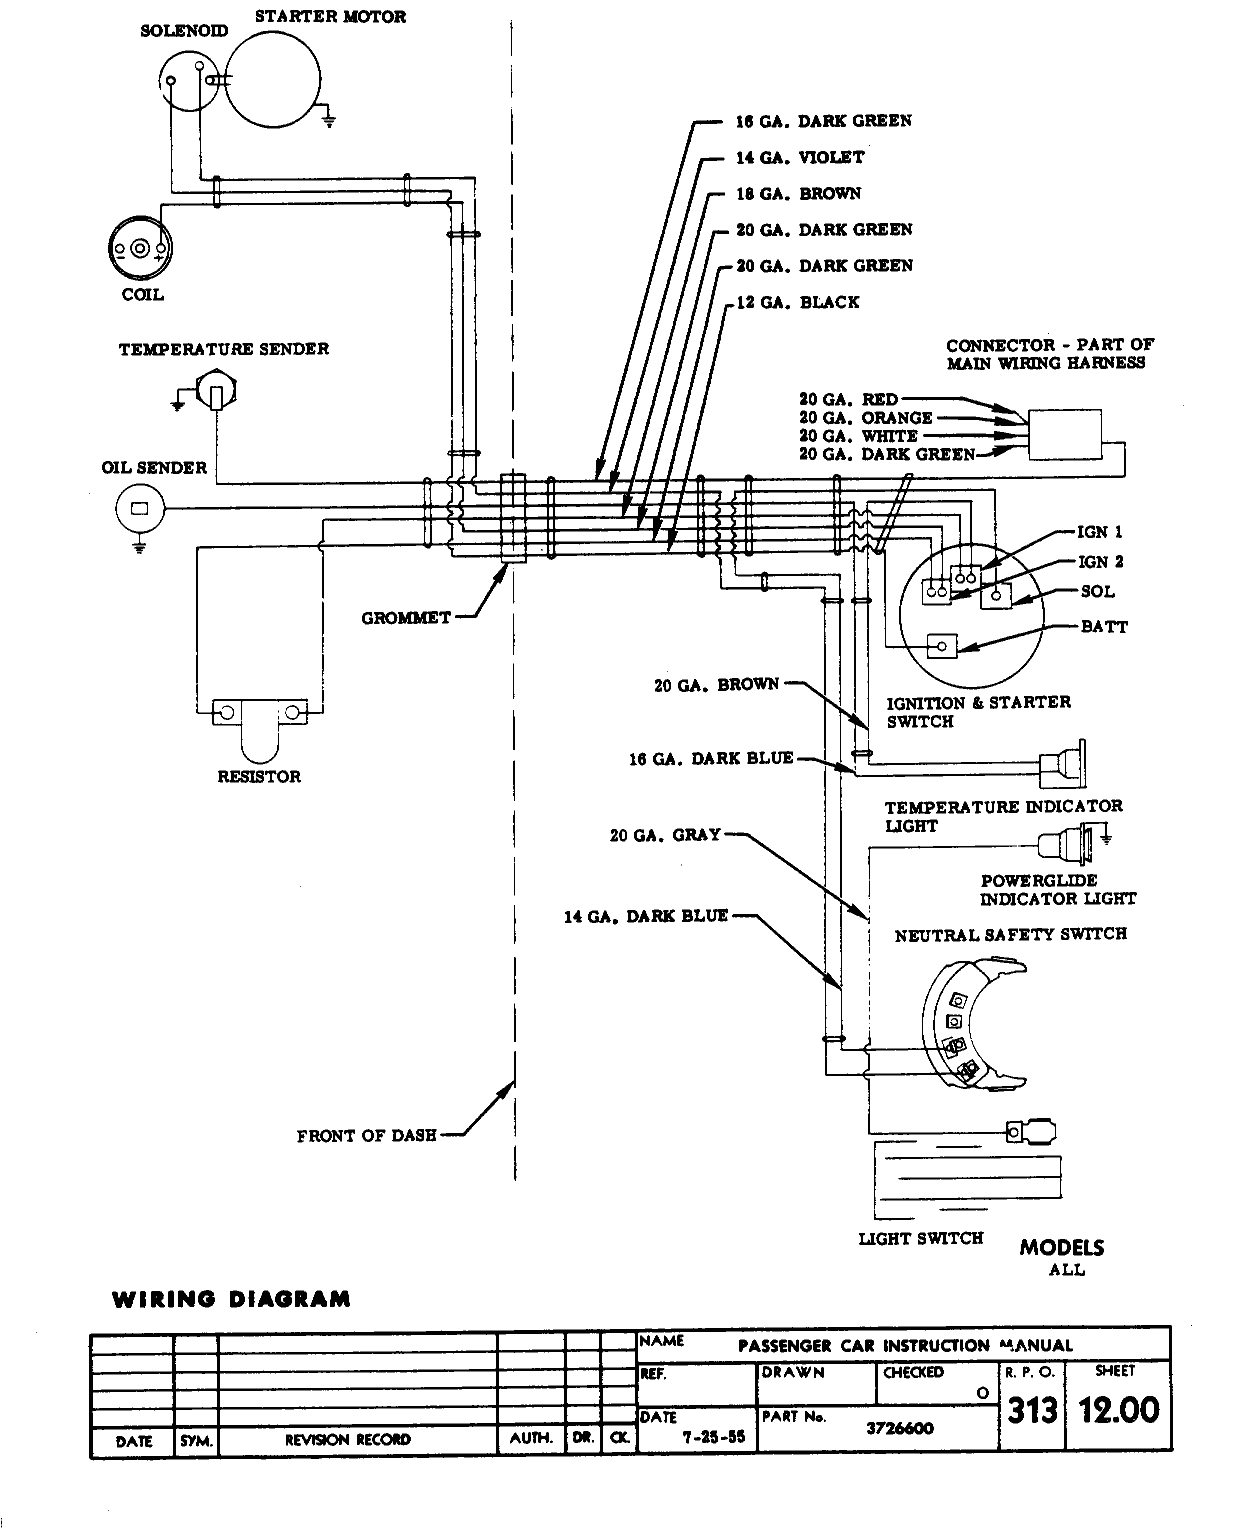 1955 chevy headlight wiring online wiring diagram